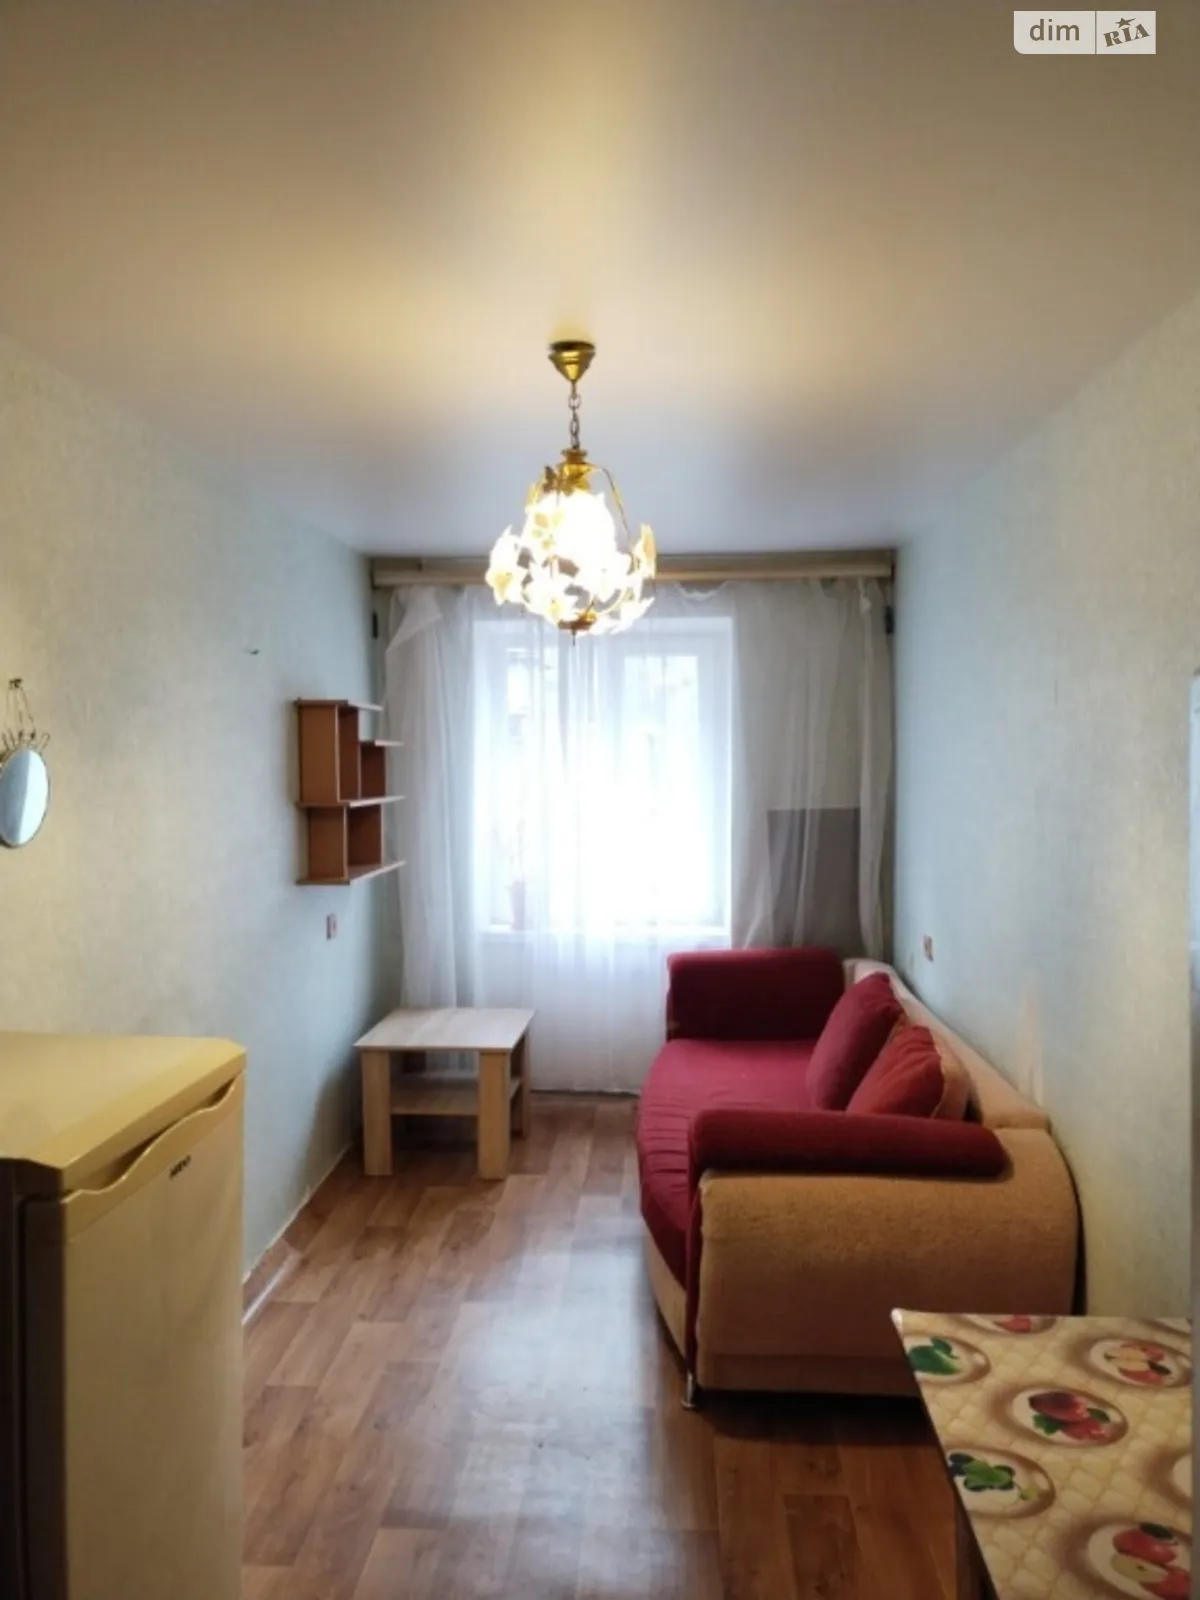 Продается комната 91.9 кв. м в Одессе, цена: 8700 $ - фото 1